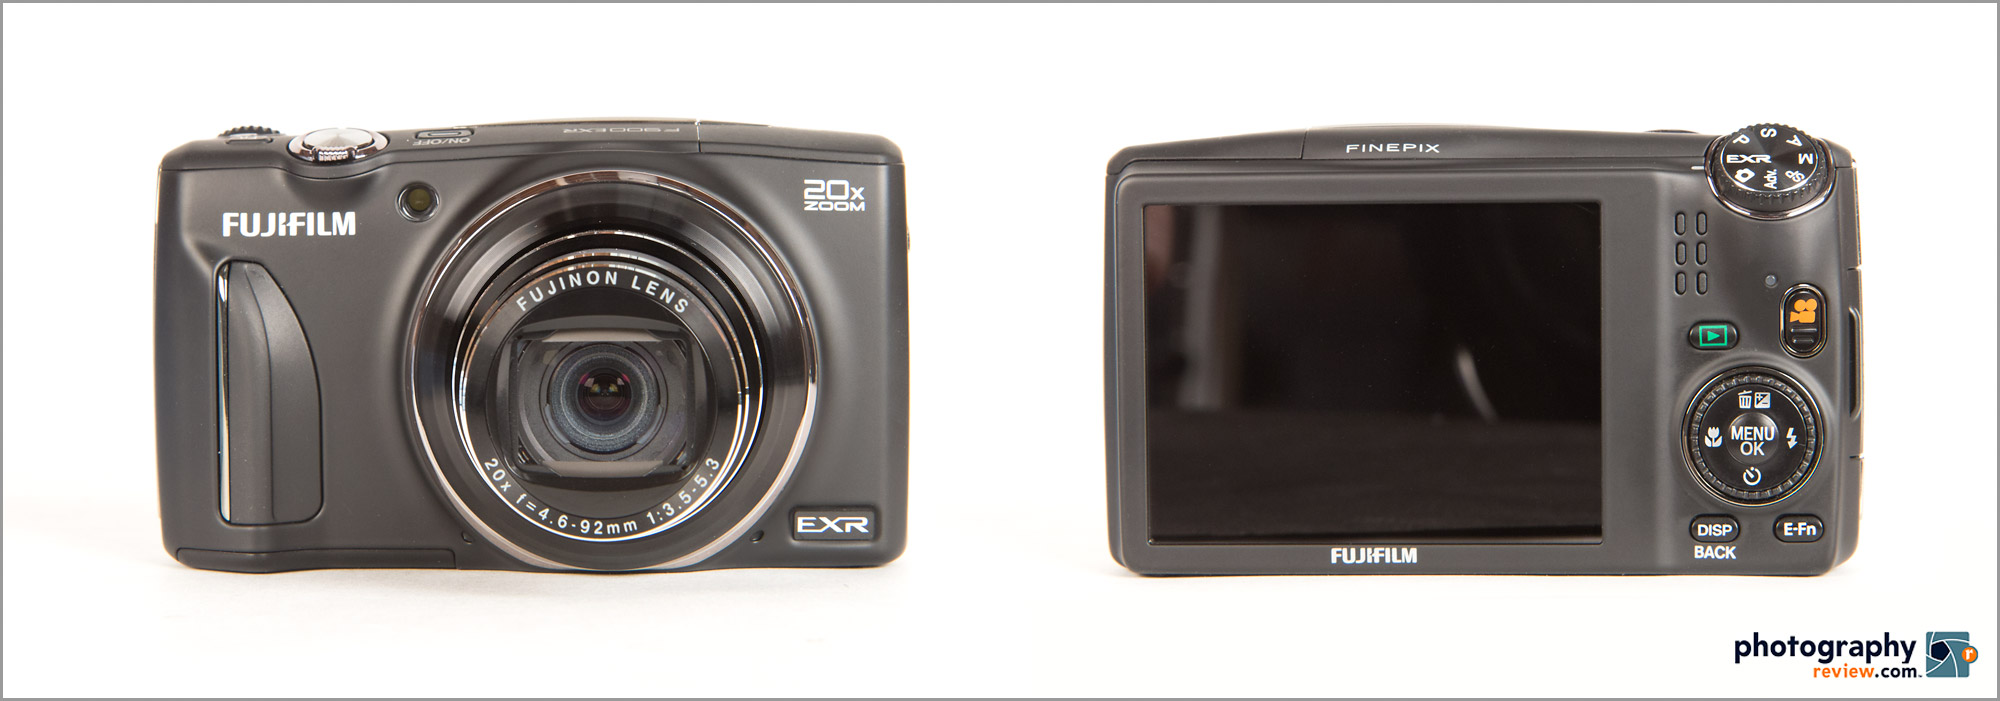 Fujifilm FinePix F900EXR Pocket Superzoom Camera - Front & Back